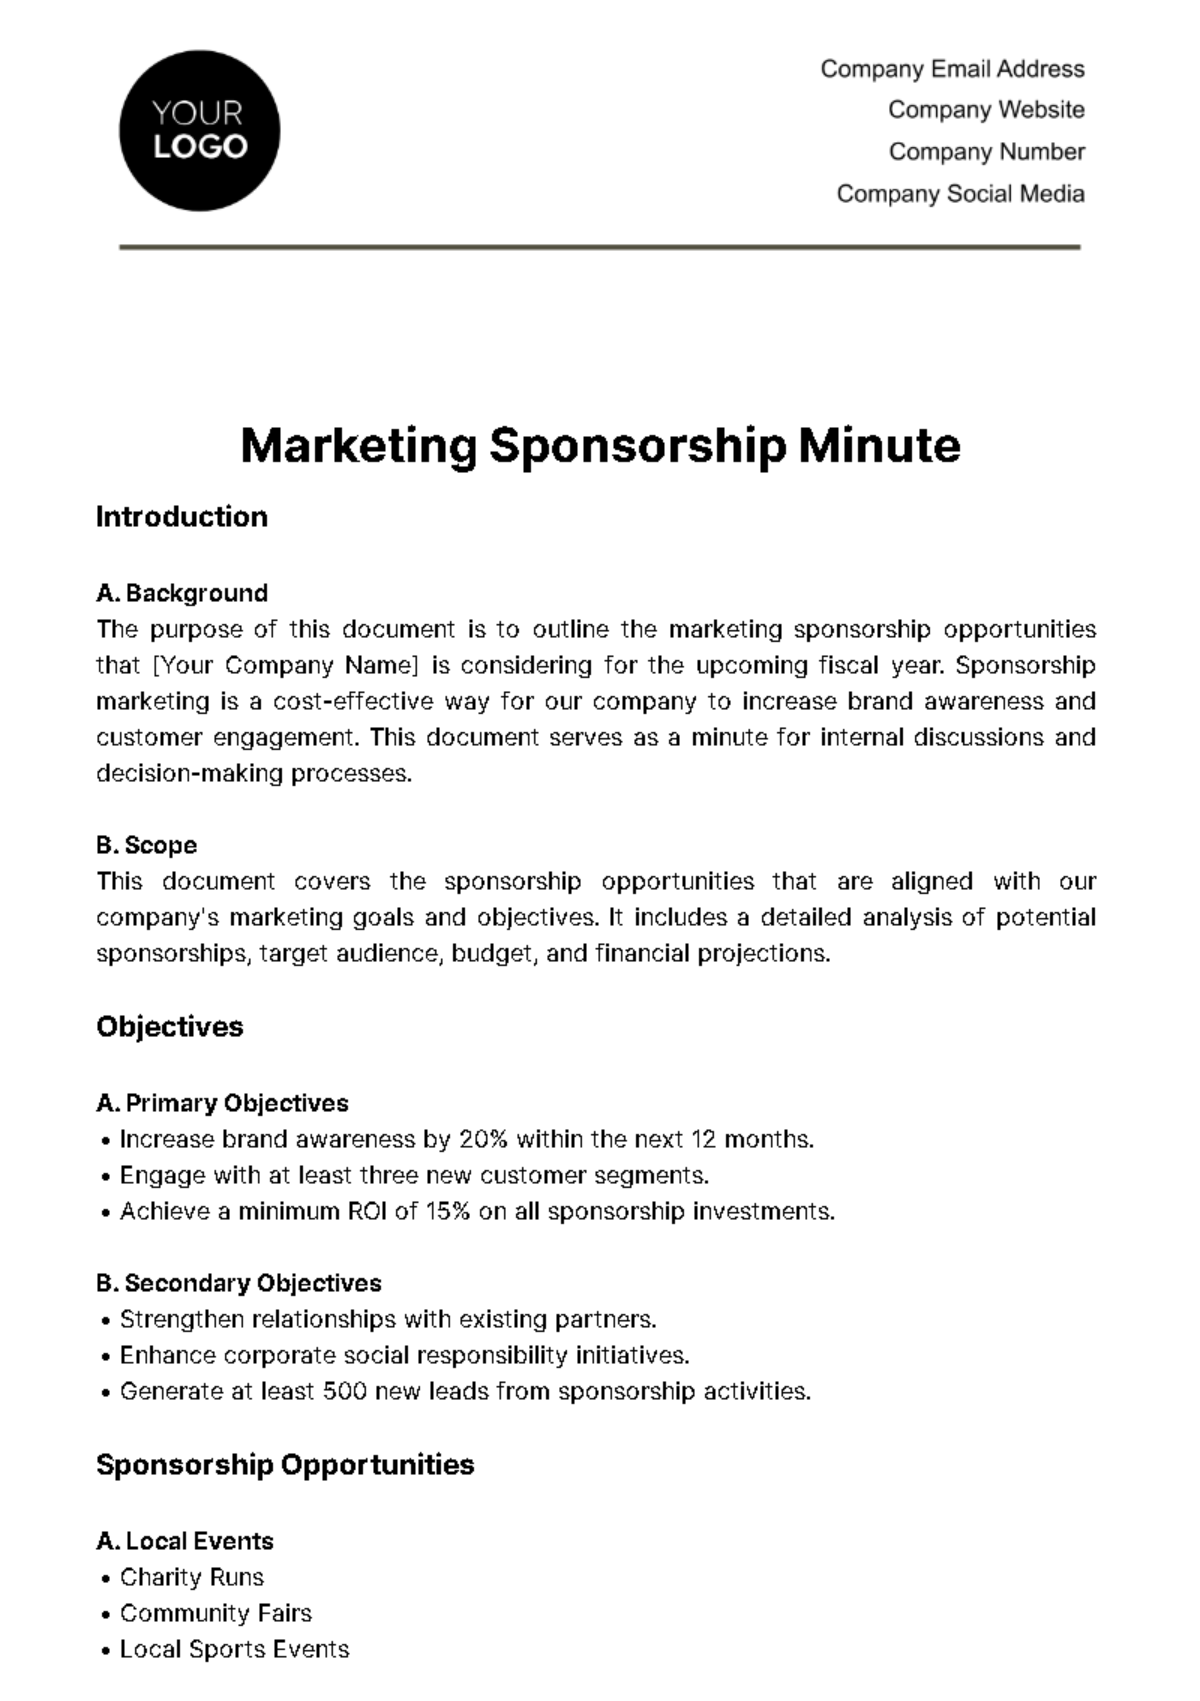 Marketing Sponsorship Minute Template